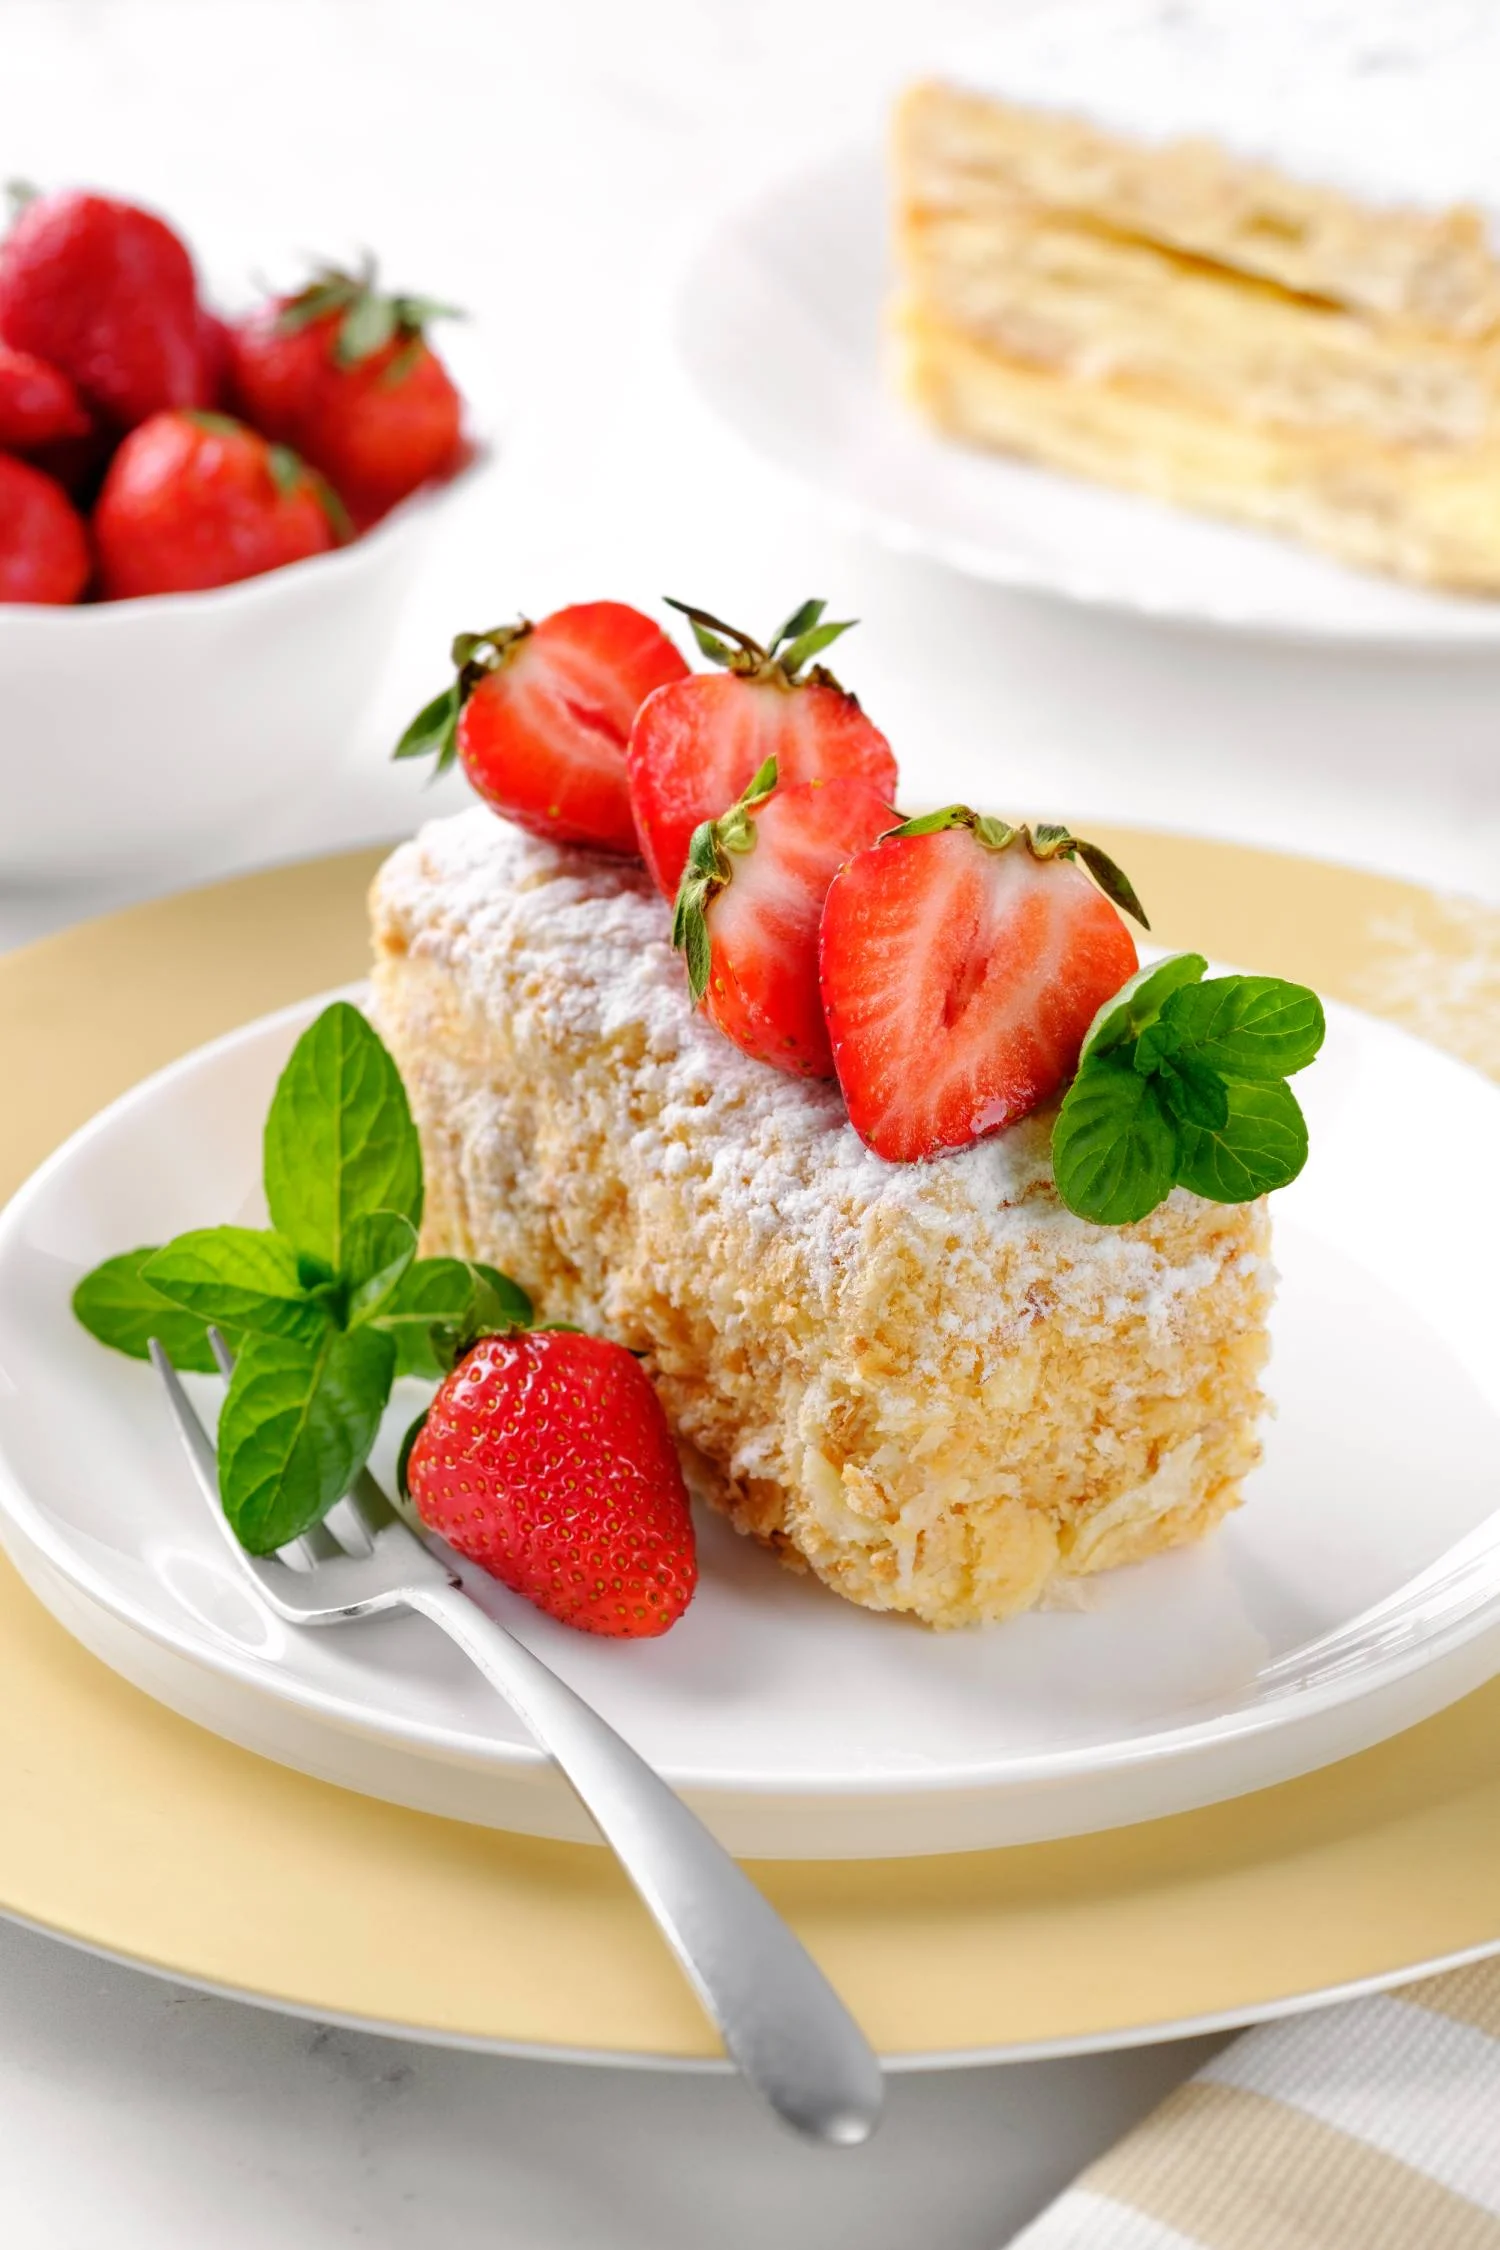 a-slice-of-napoleon-cake-with-strawberries-and-min-2022-01-28-21-56-52-utc (1)